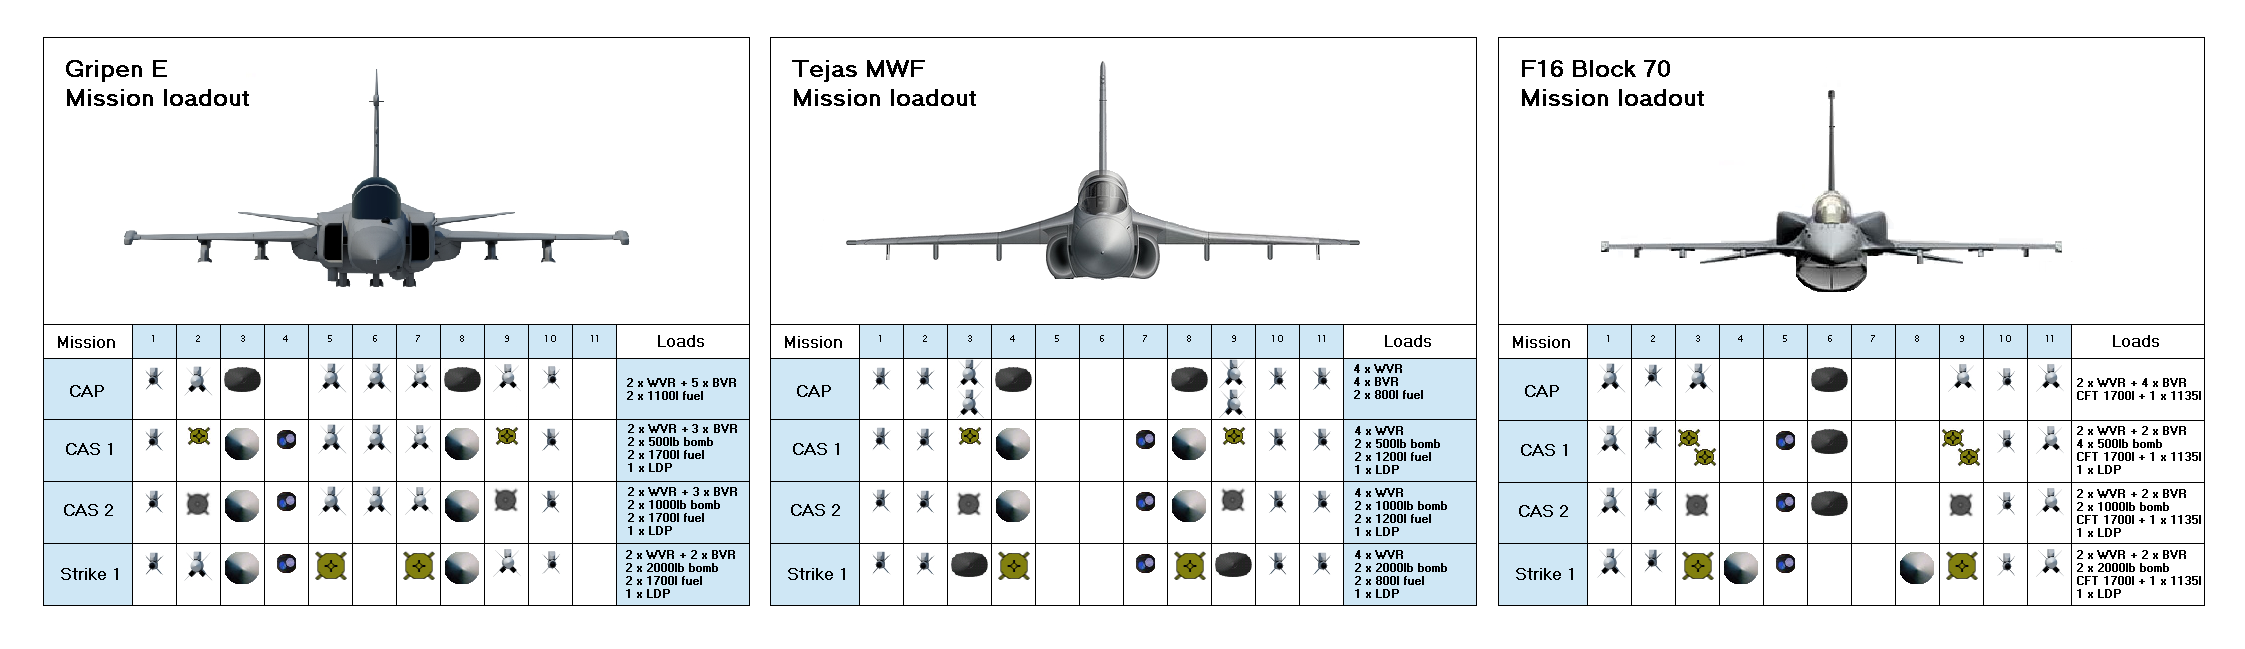 Fighter comparison MWF 1.PNG